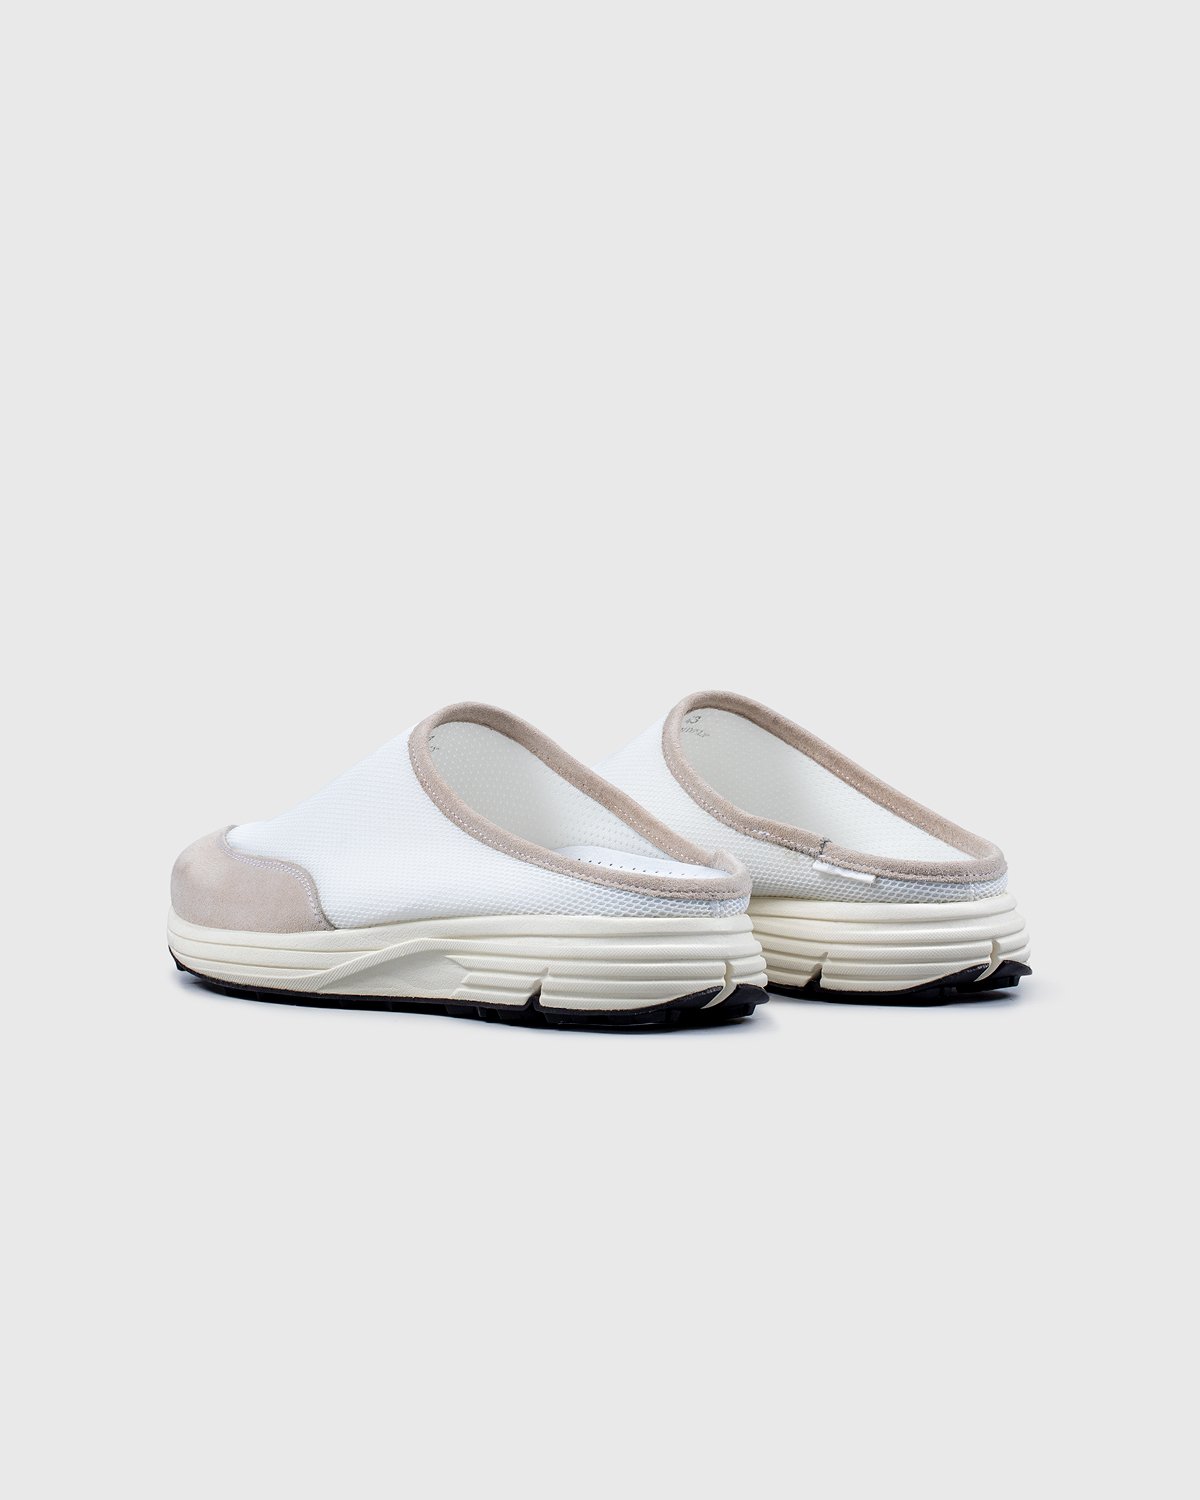 Diemme - Maggiore White Mesh - Footwear - White - Image 3